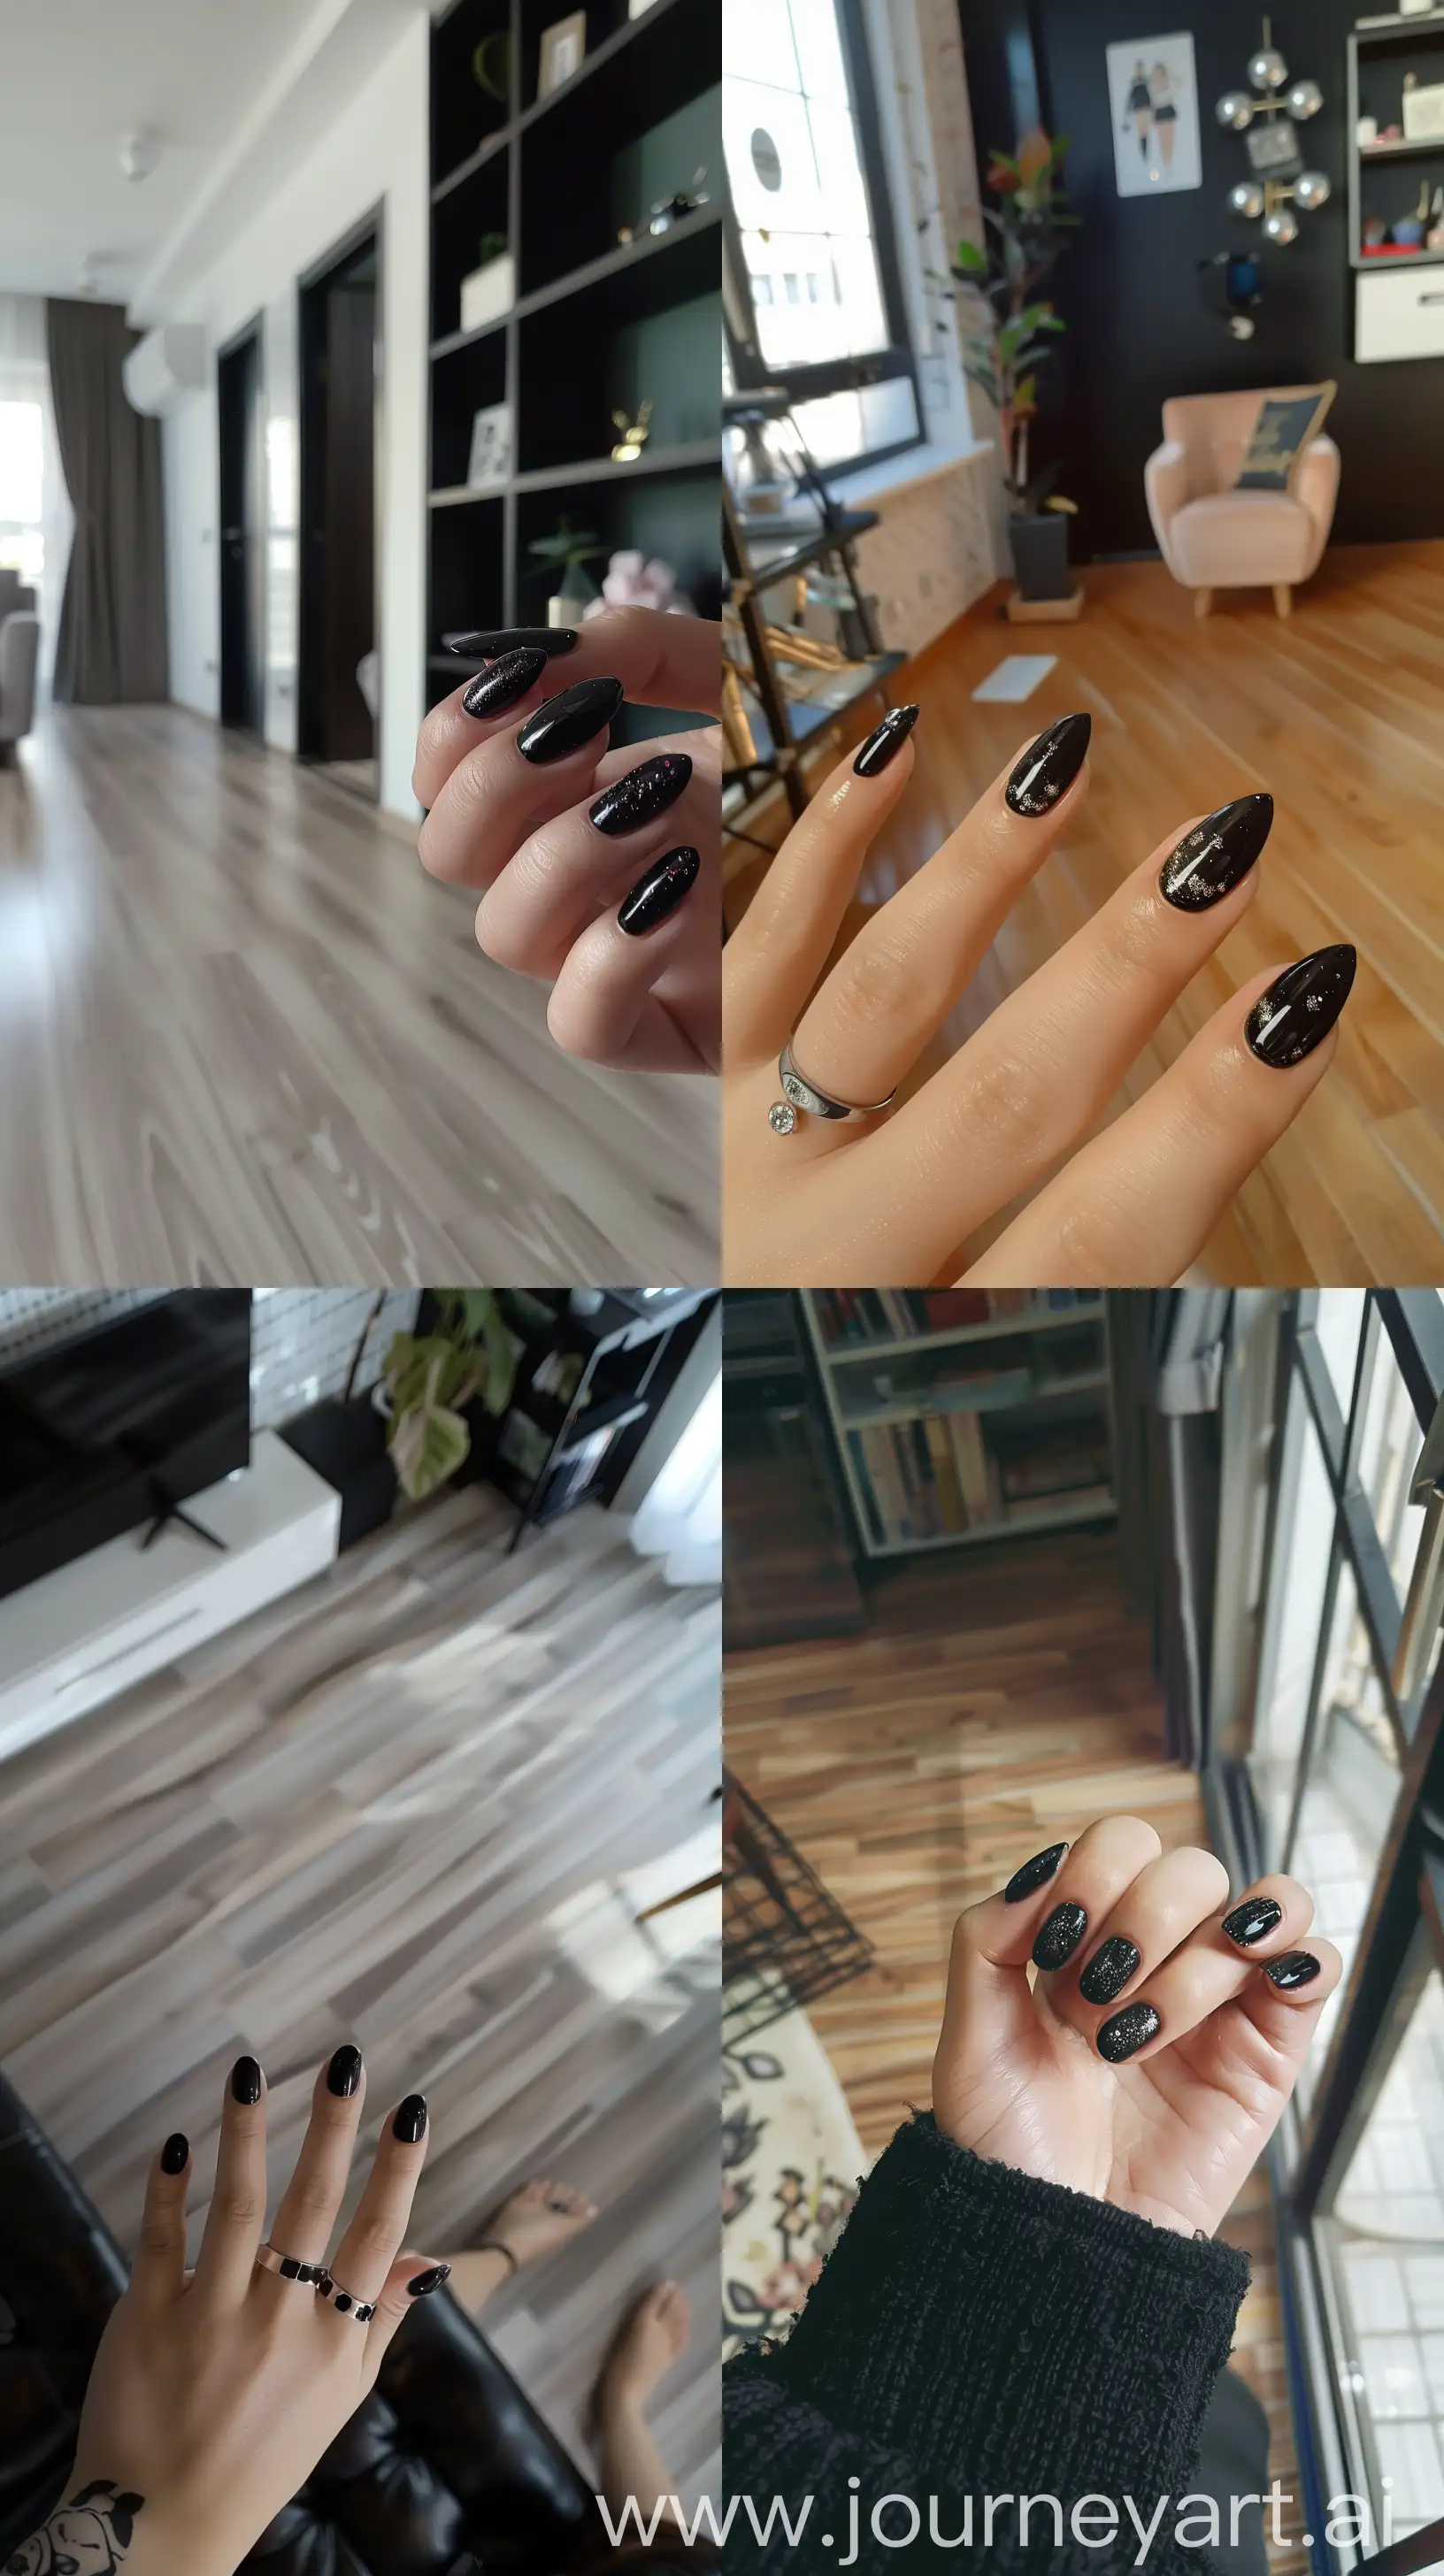 aestethic instagram selfie, close up korean girl hand with black nail art, modern apartment floor --ar 9:16